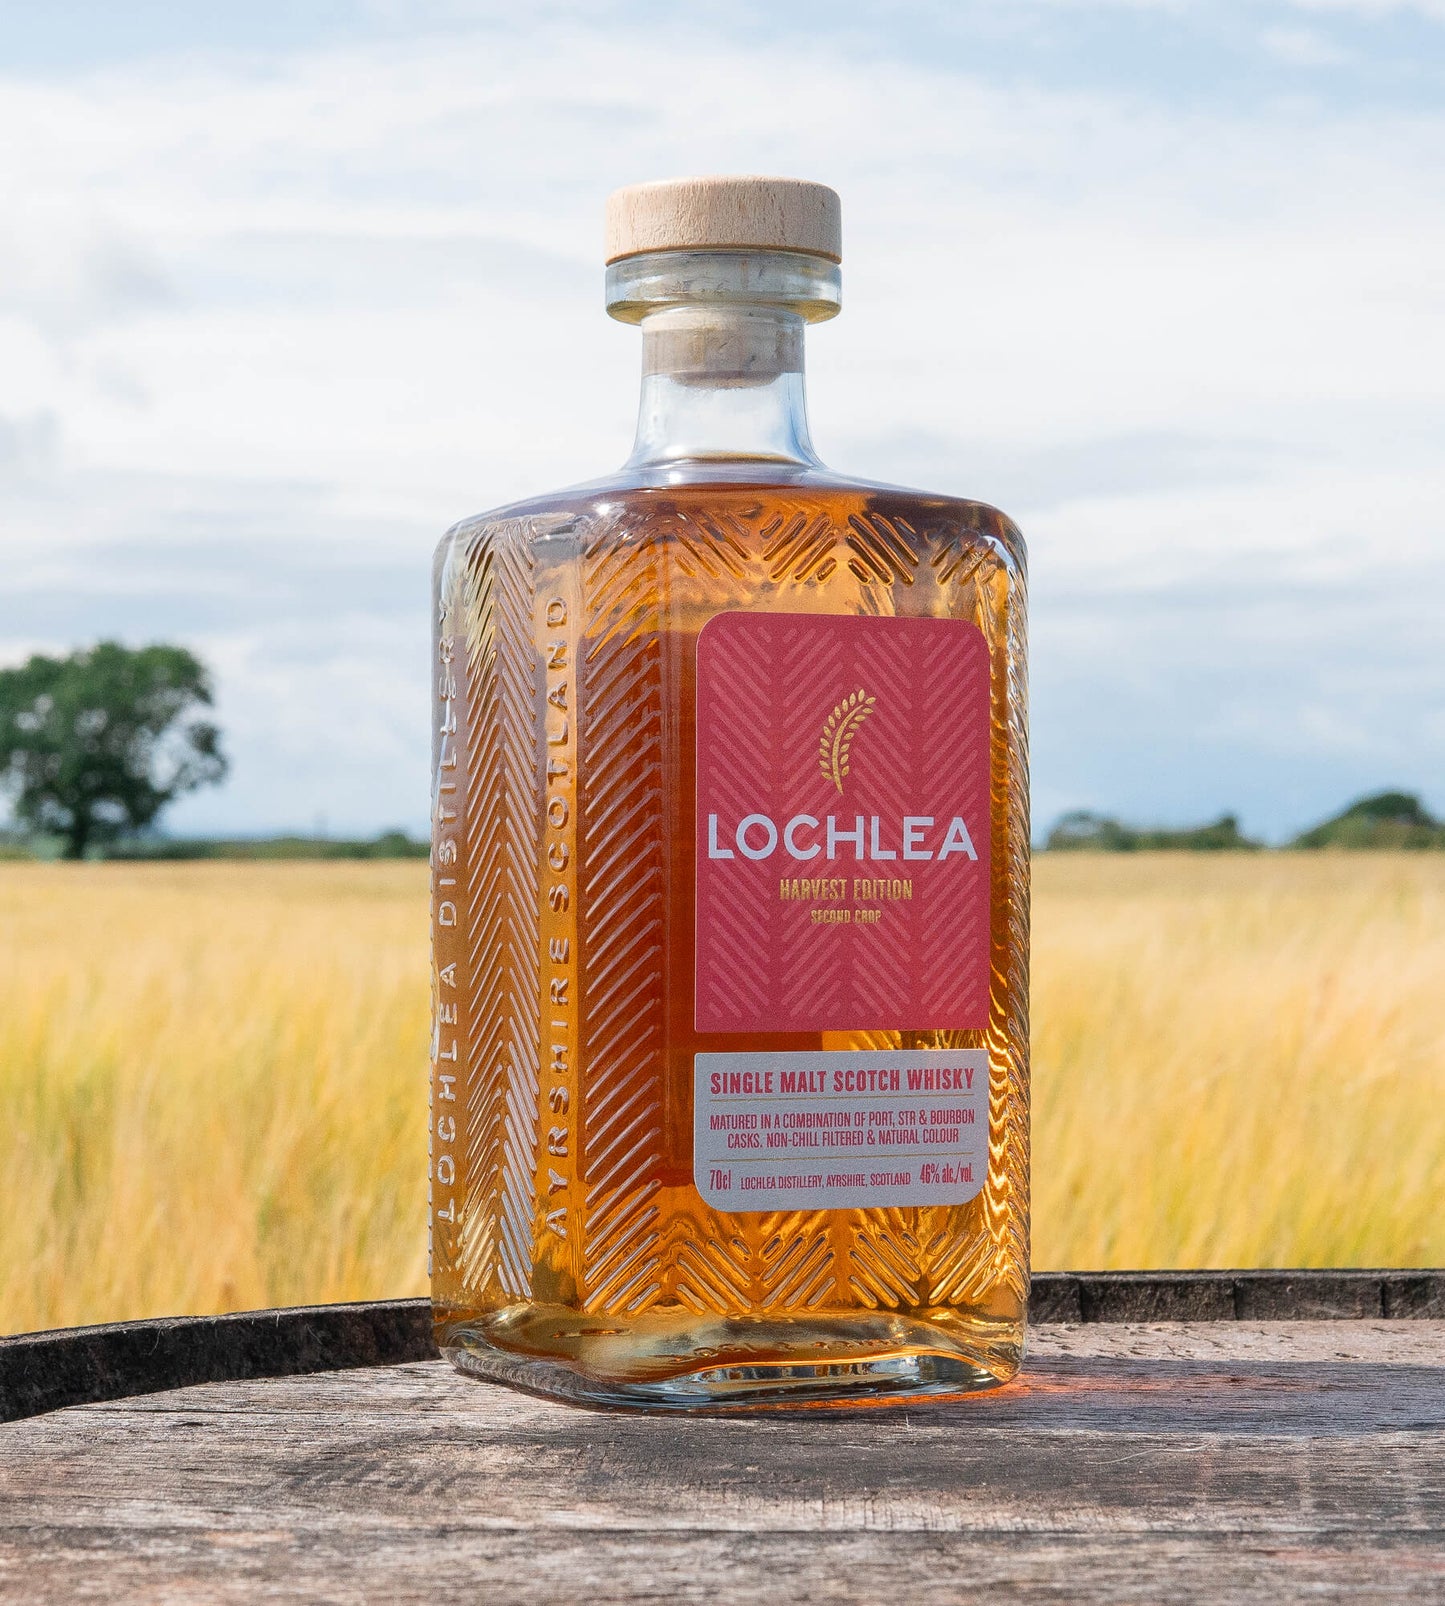 Lochlea Single Malt Scotch Whisky • Harvest Edition 2nd Crop